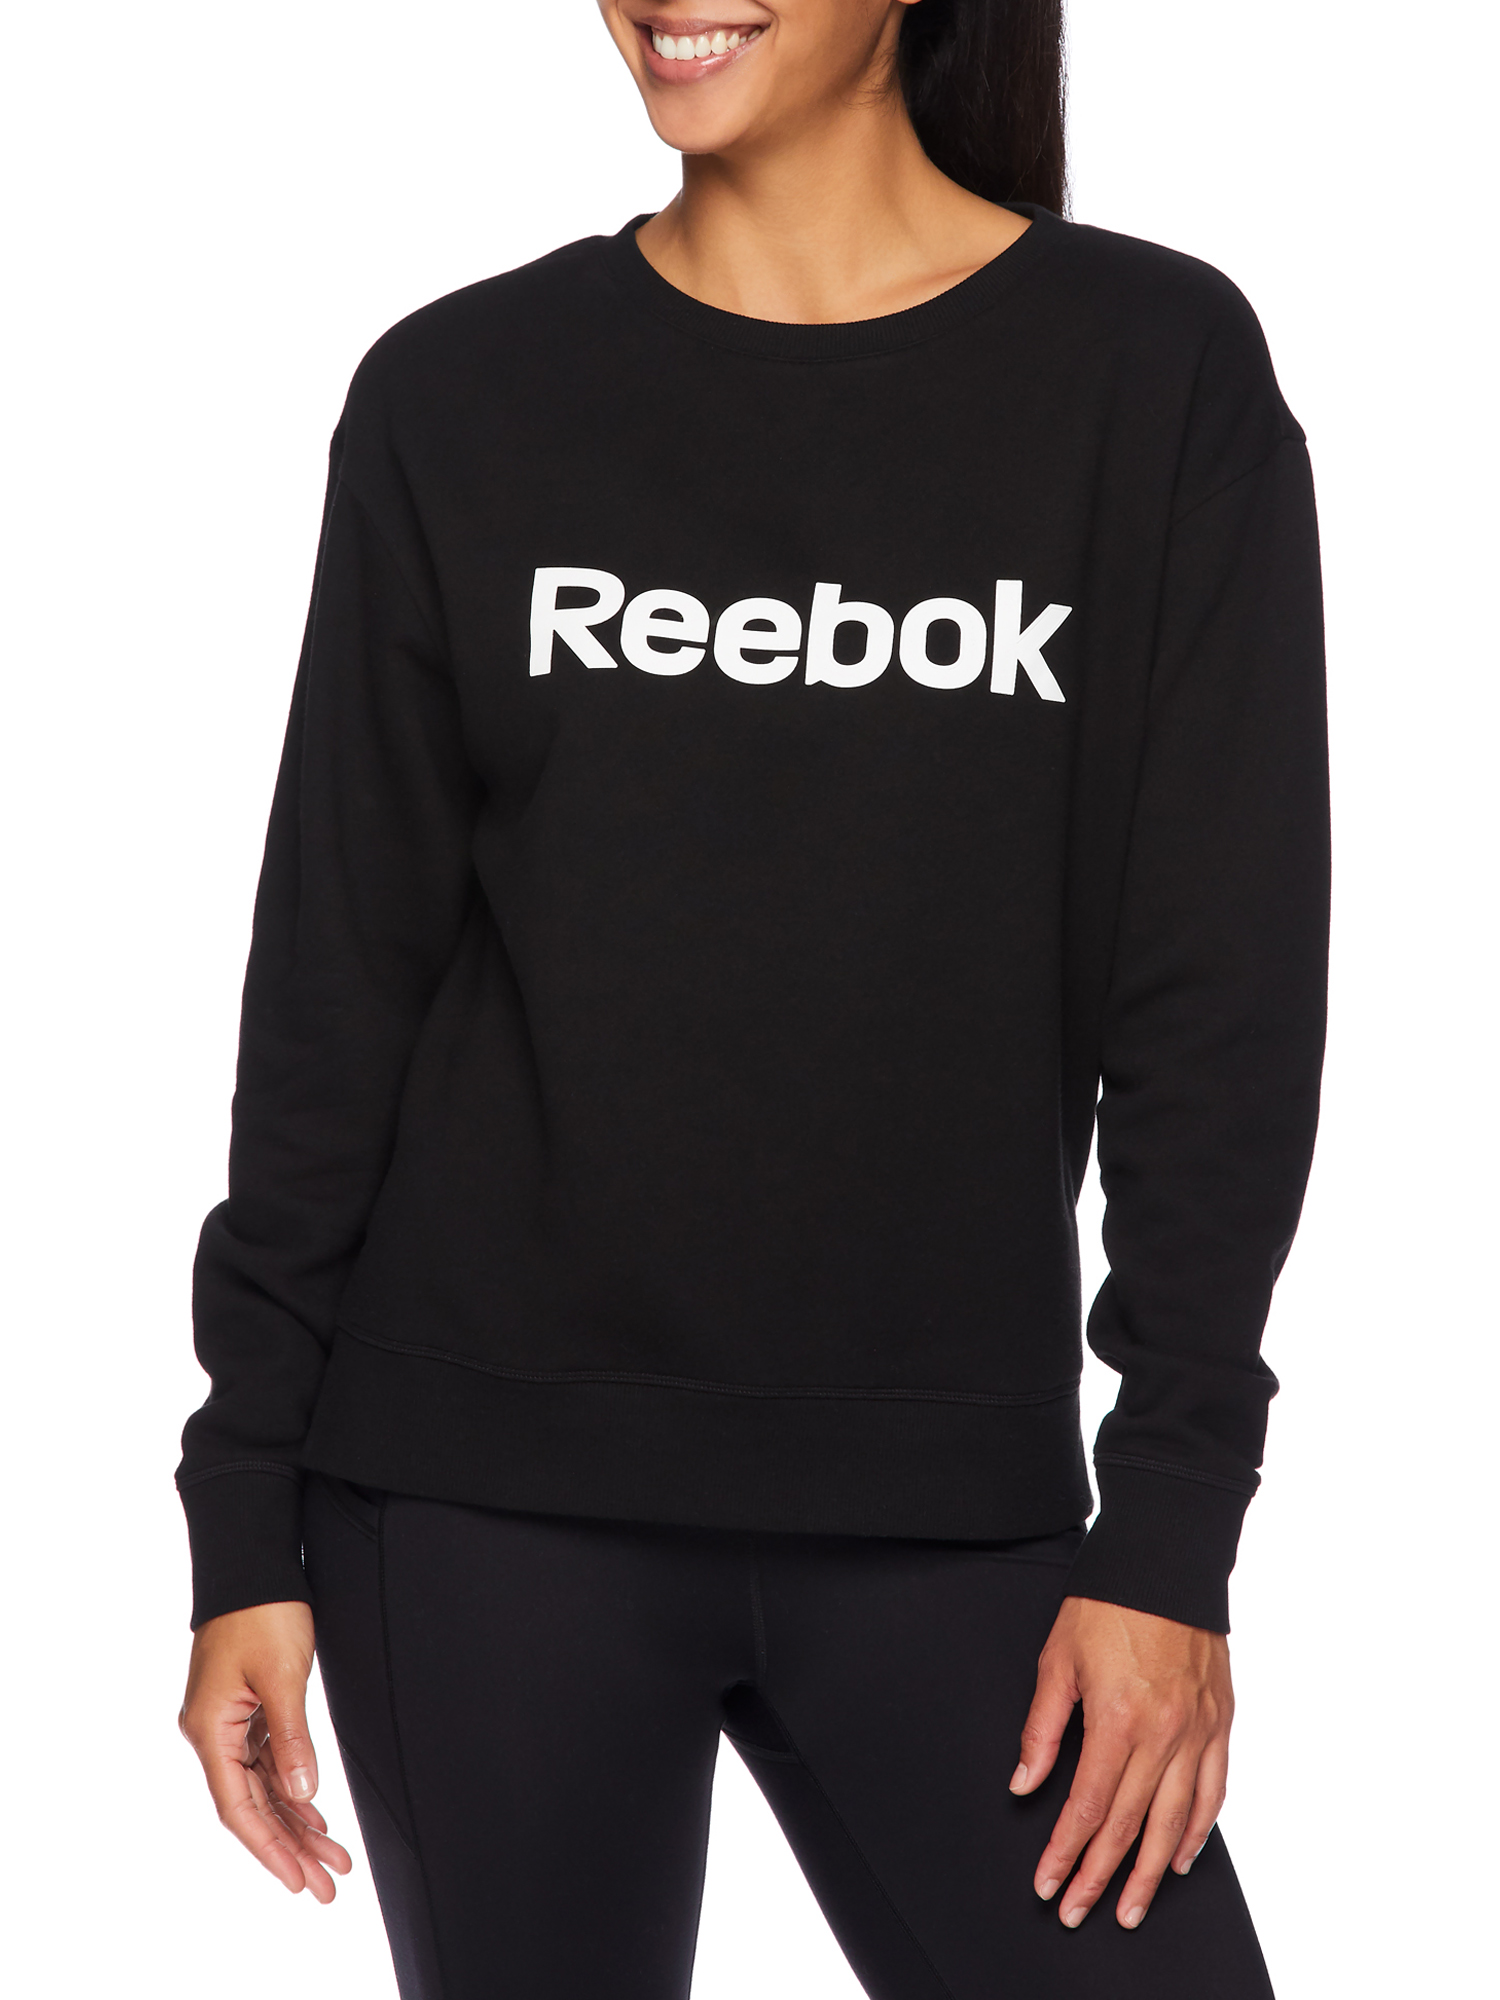 Reebok Women's Athleisure Fleece Crew - image 1 of 4